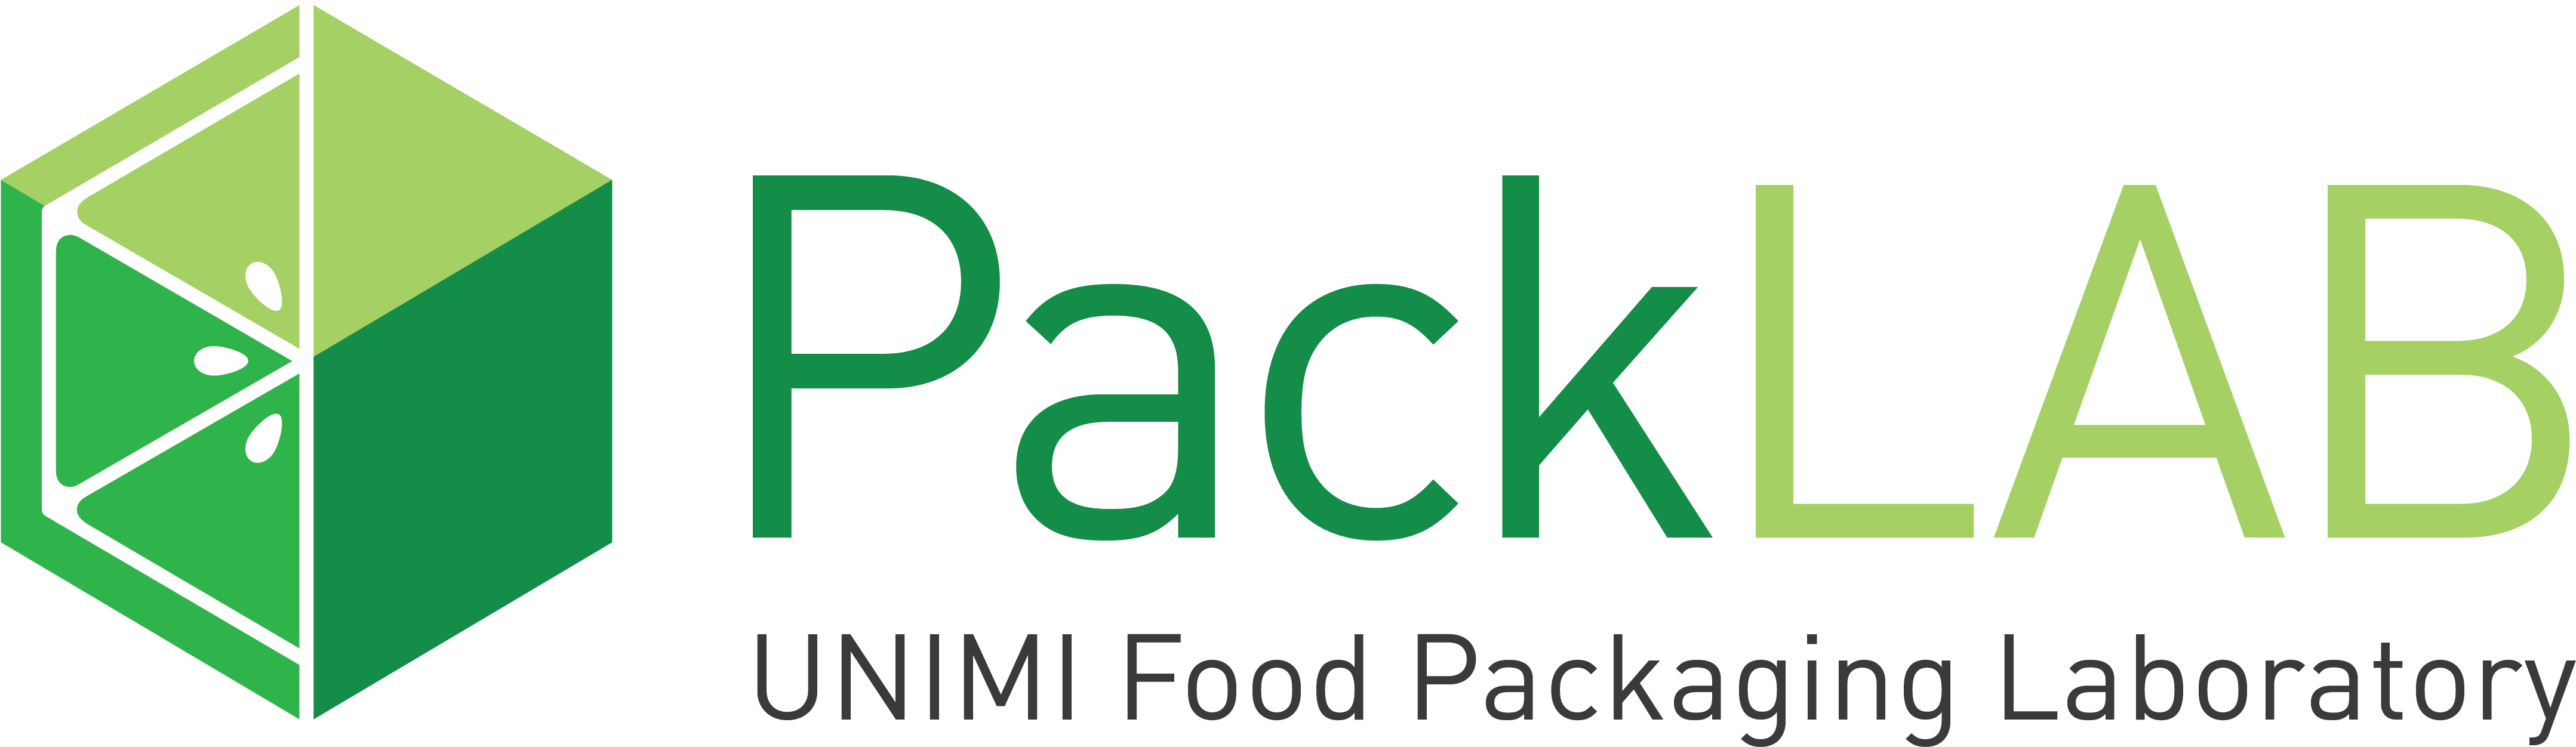 Pack L A B U N I M I Food Packaging Laboratory Logo PNG